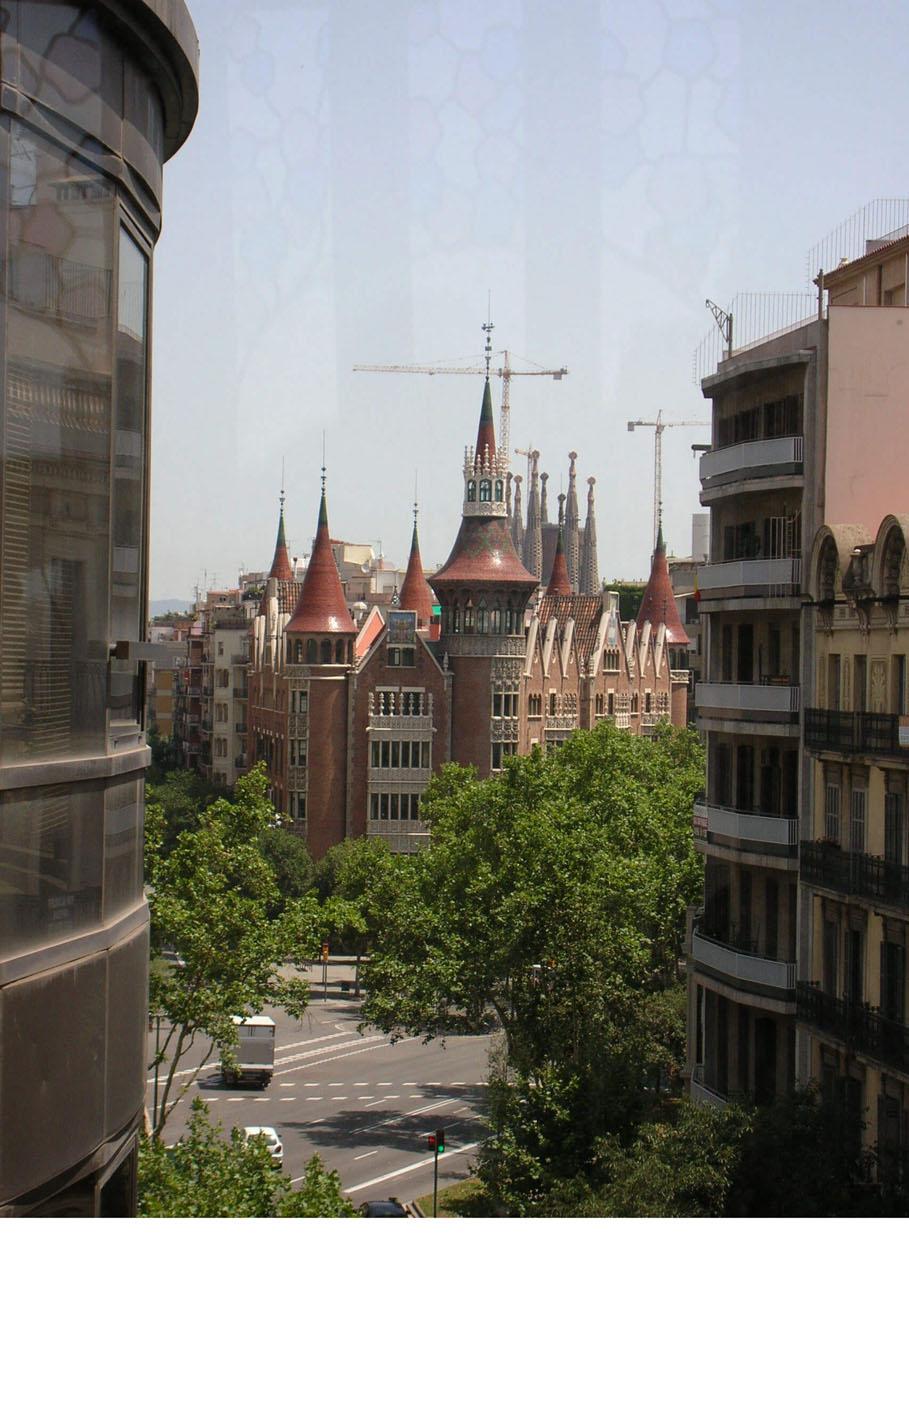 12 Casa Terrades ou Casa de les Punxes - avinguda Diagonal, 420 - architecte Josep Puig i Cadafalch - 1905